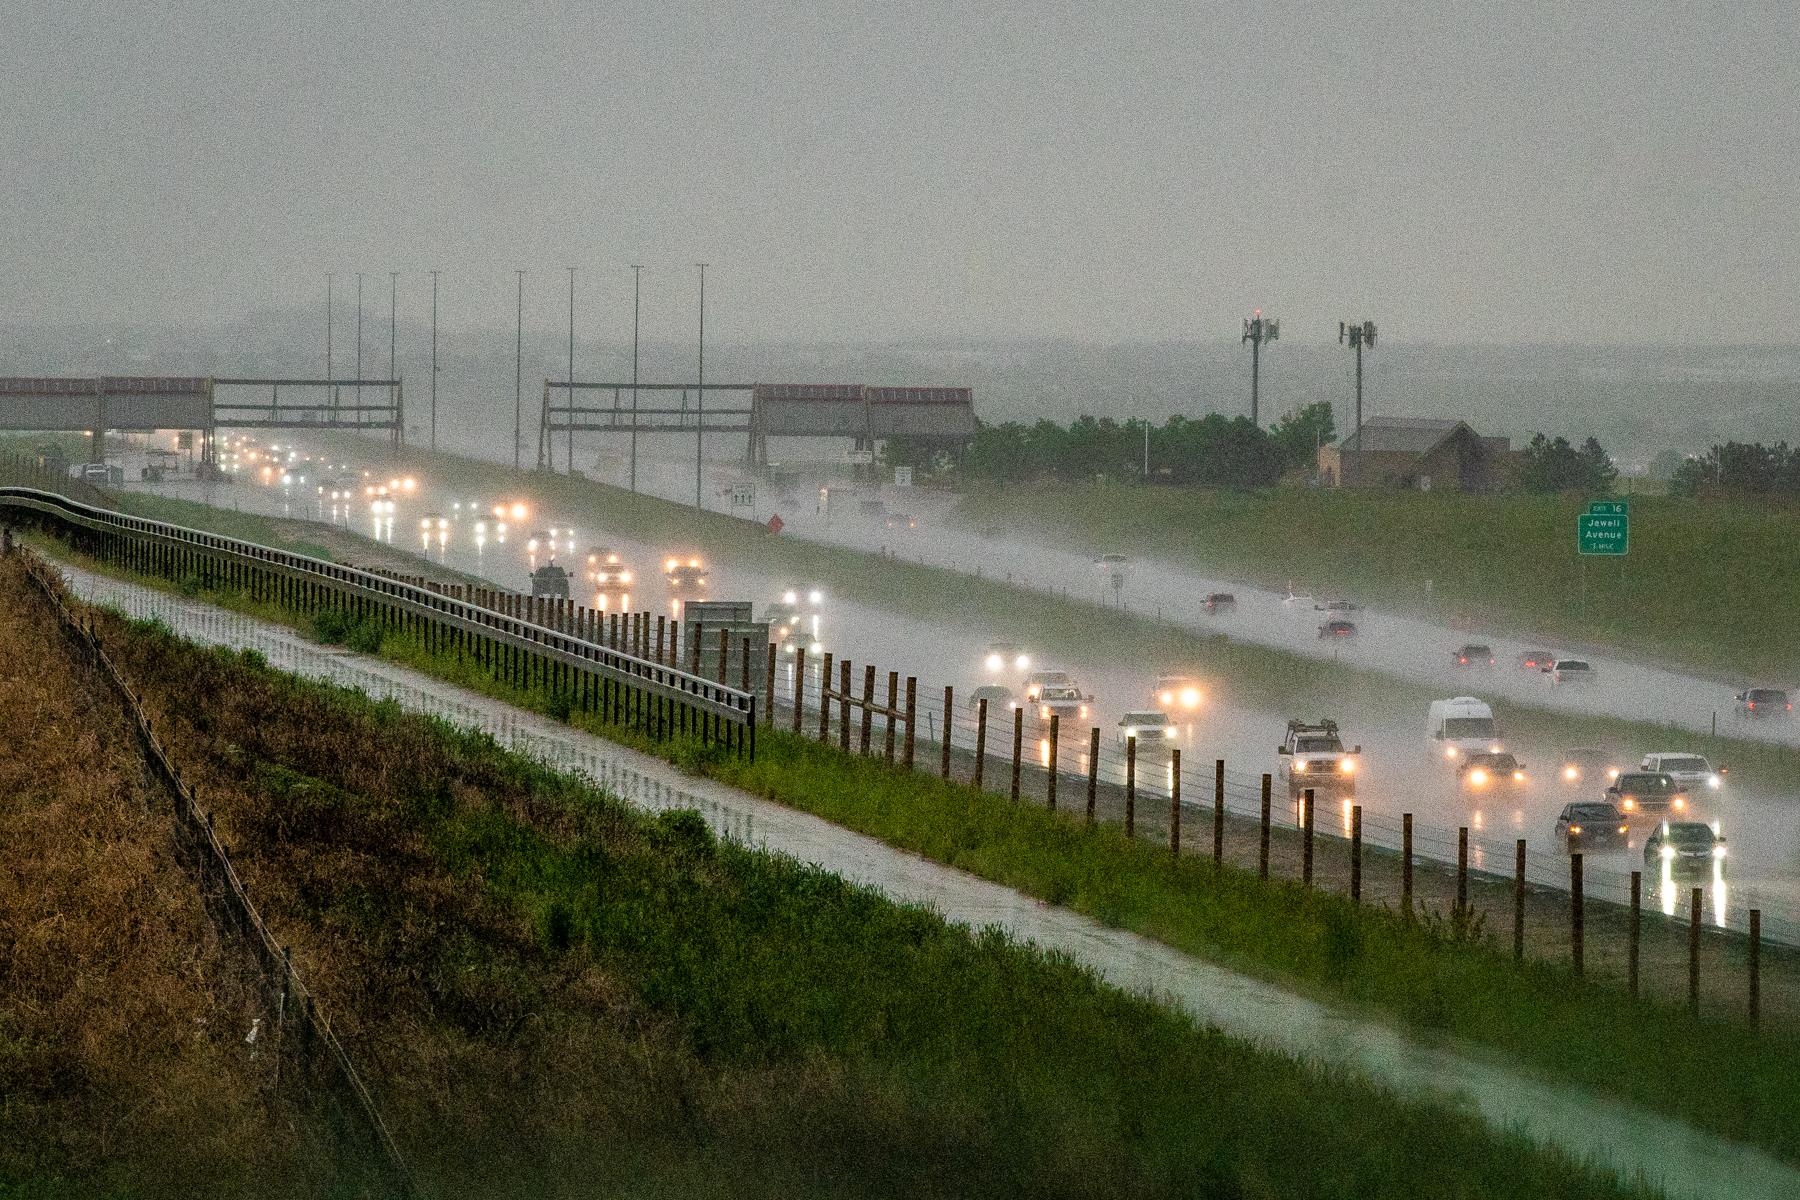 Cars on E-470 turn on their headlights in the rain